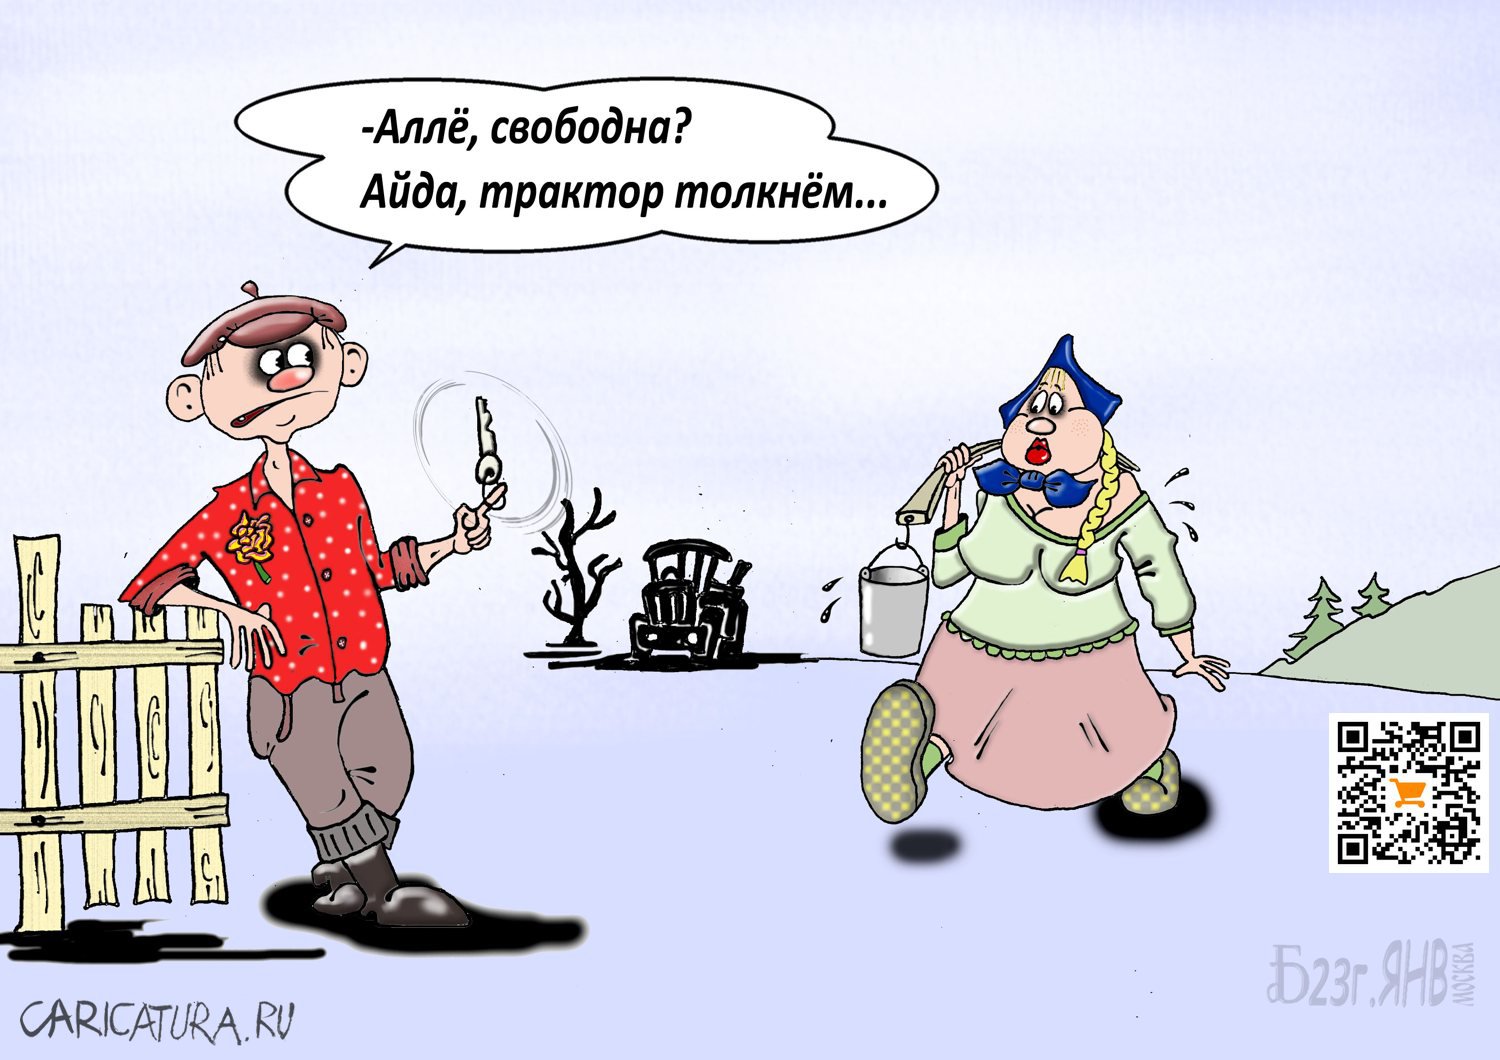 Карикатура "ПроСельские будни", Борис Демин